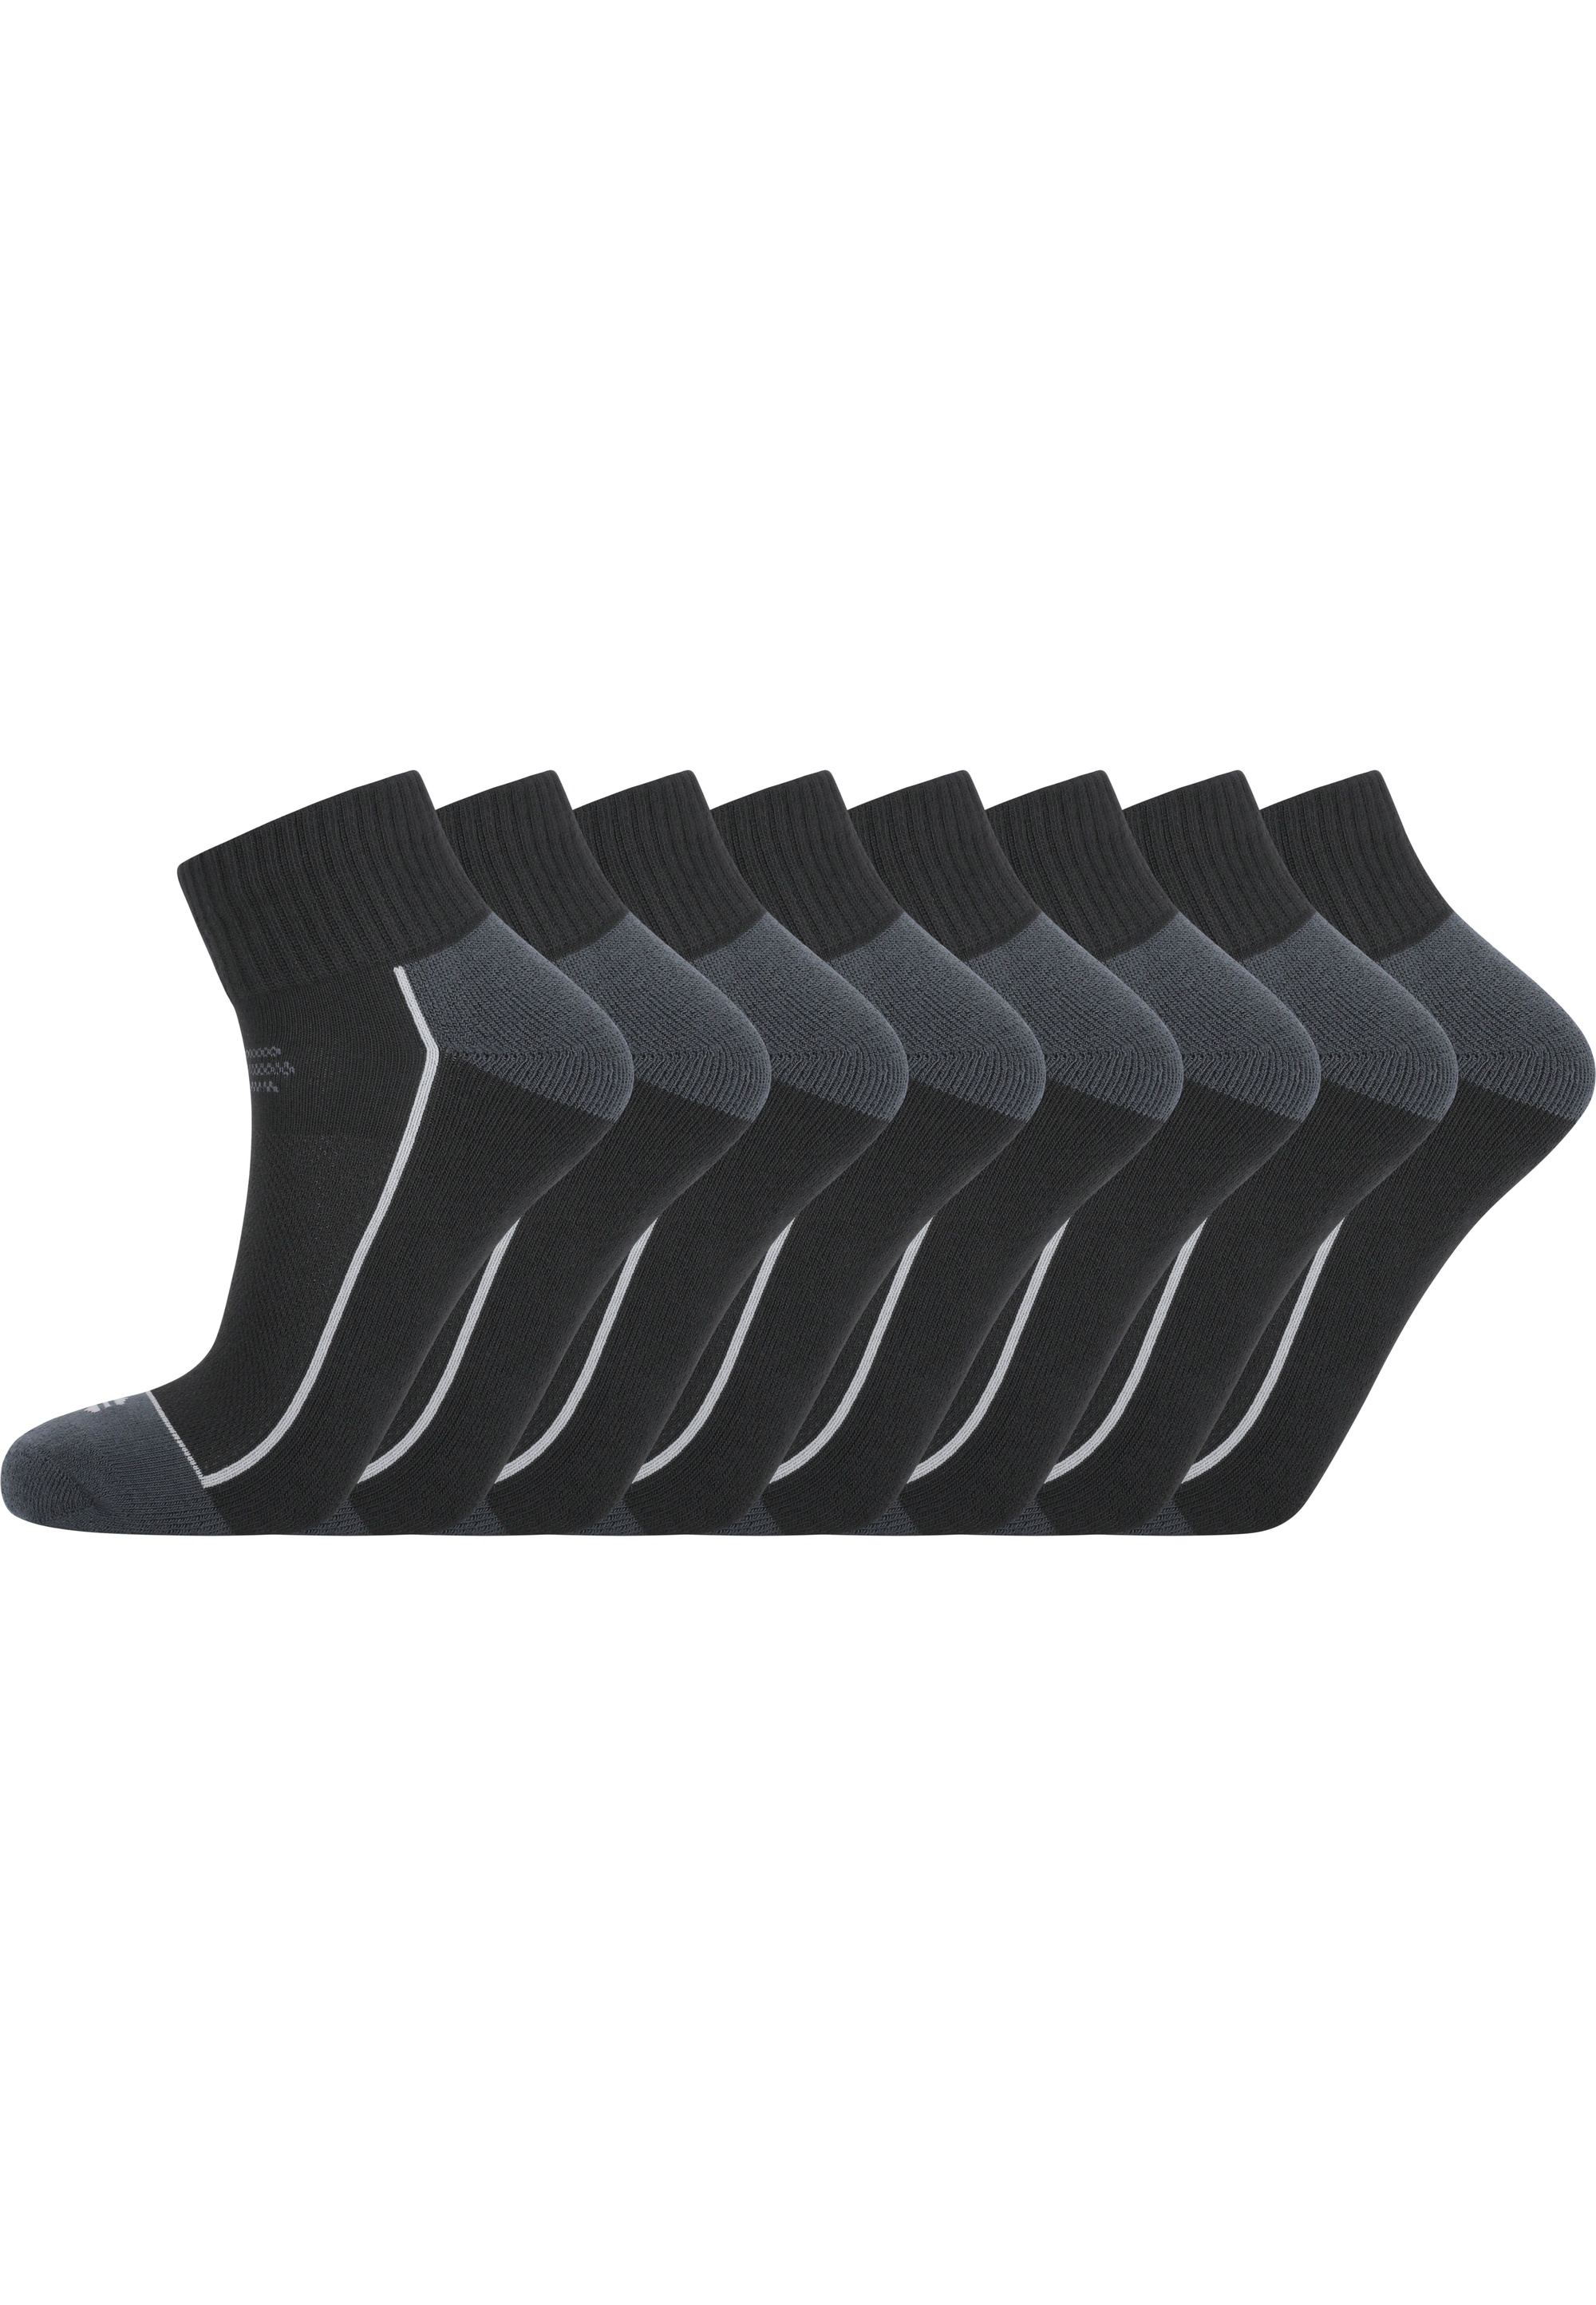 Socken »Avery«, (8 Paar), in atmungsaktiver Qualität